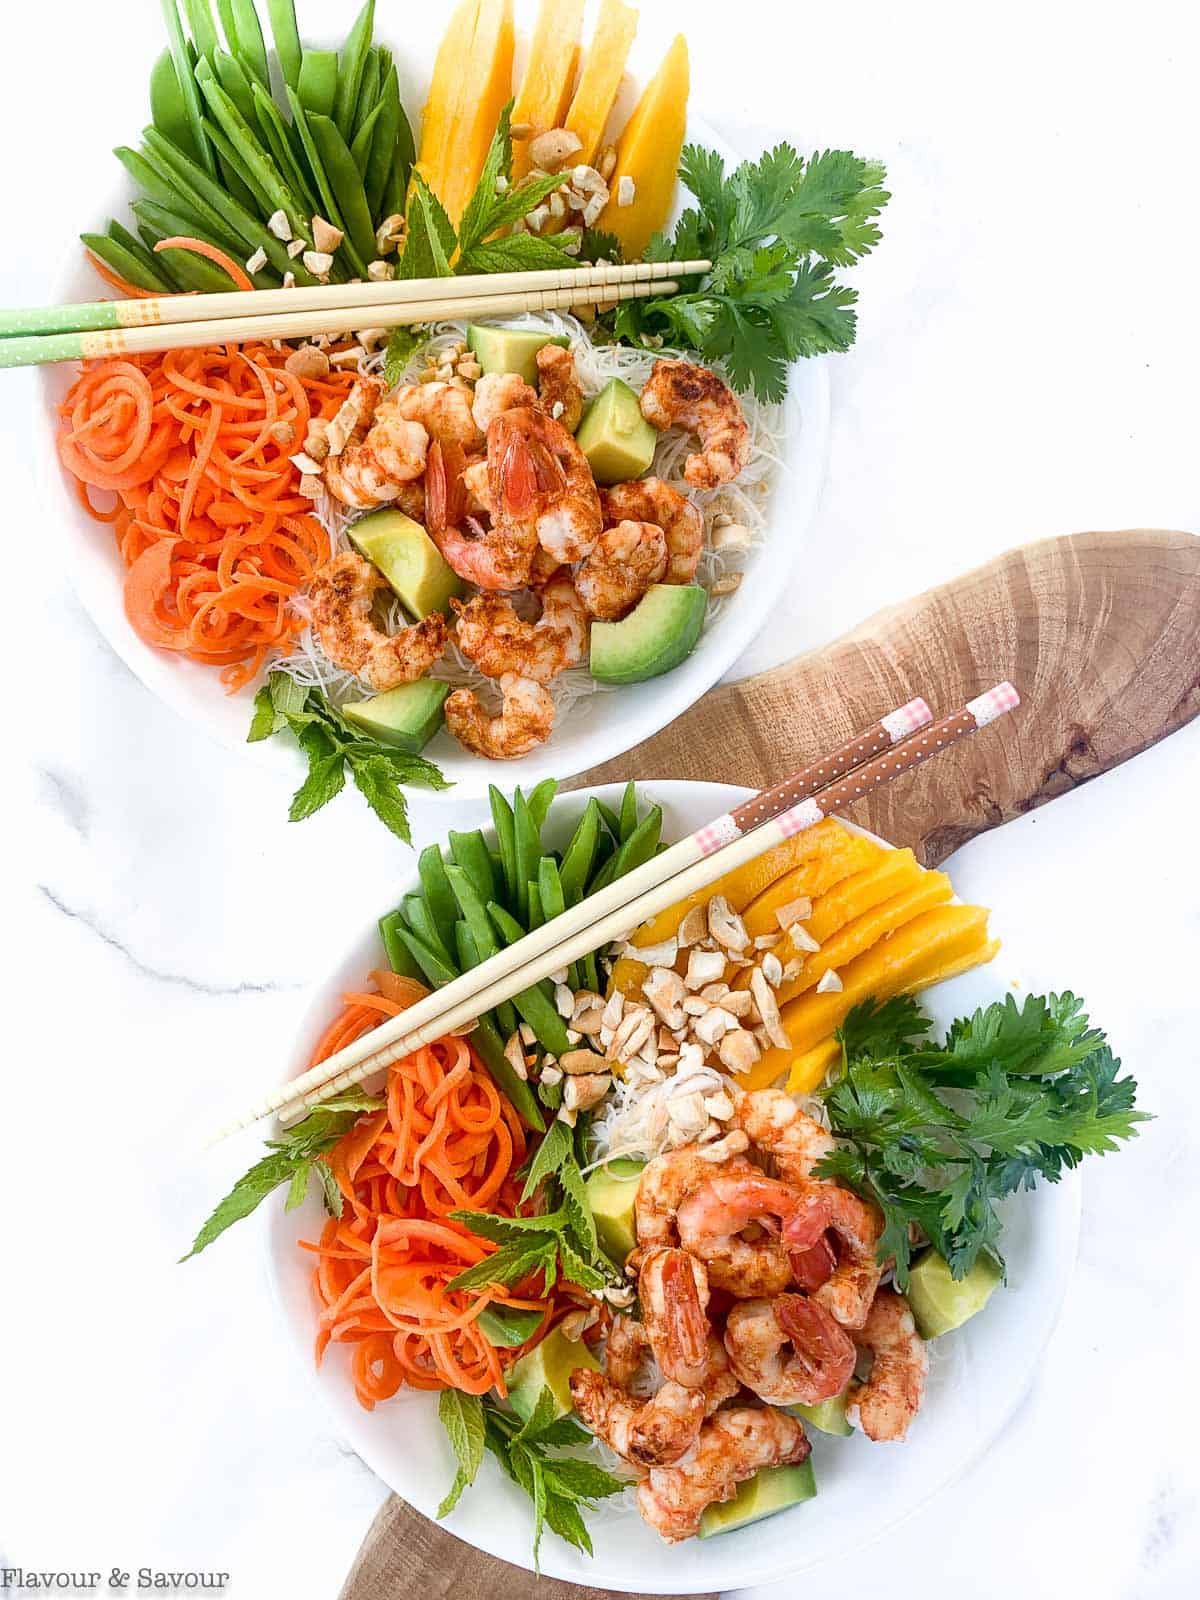 Two bowls of Vietnamese Prawn or Shrimp Noodle Bowl